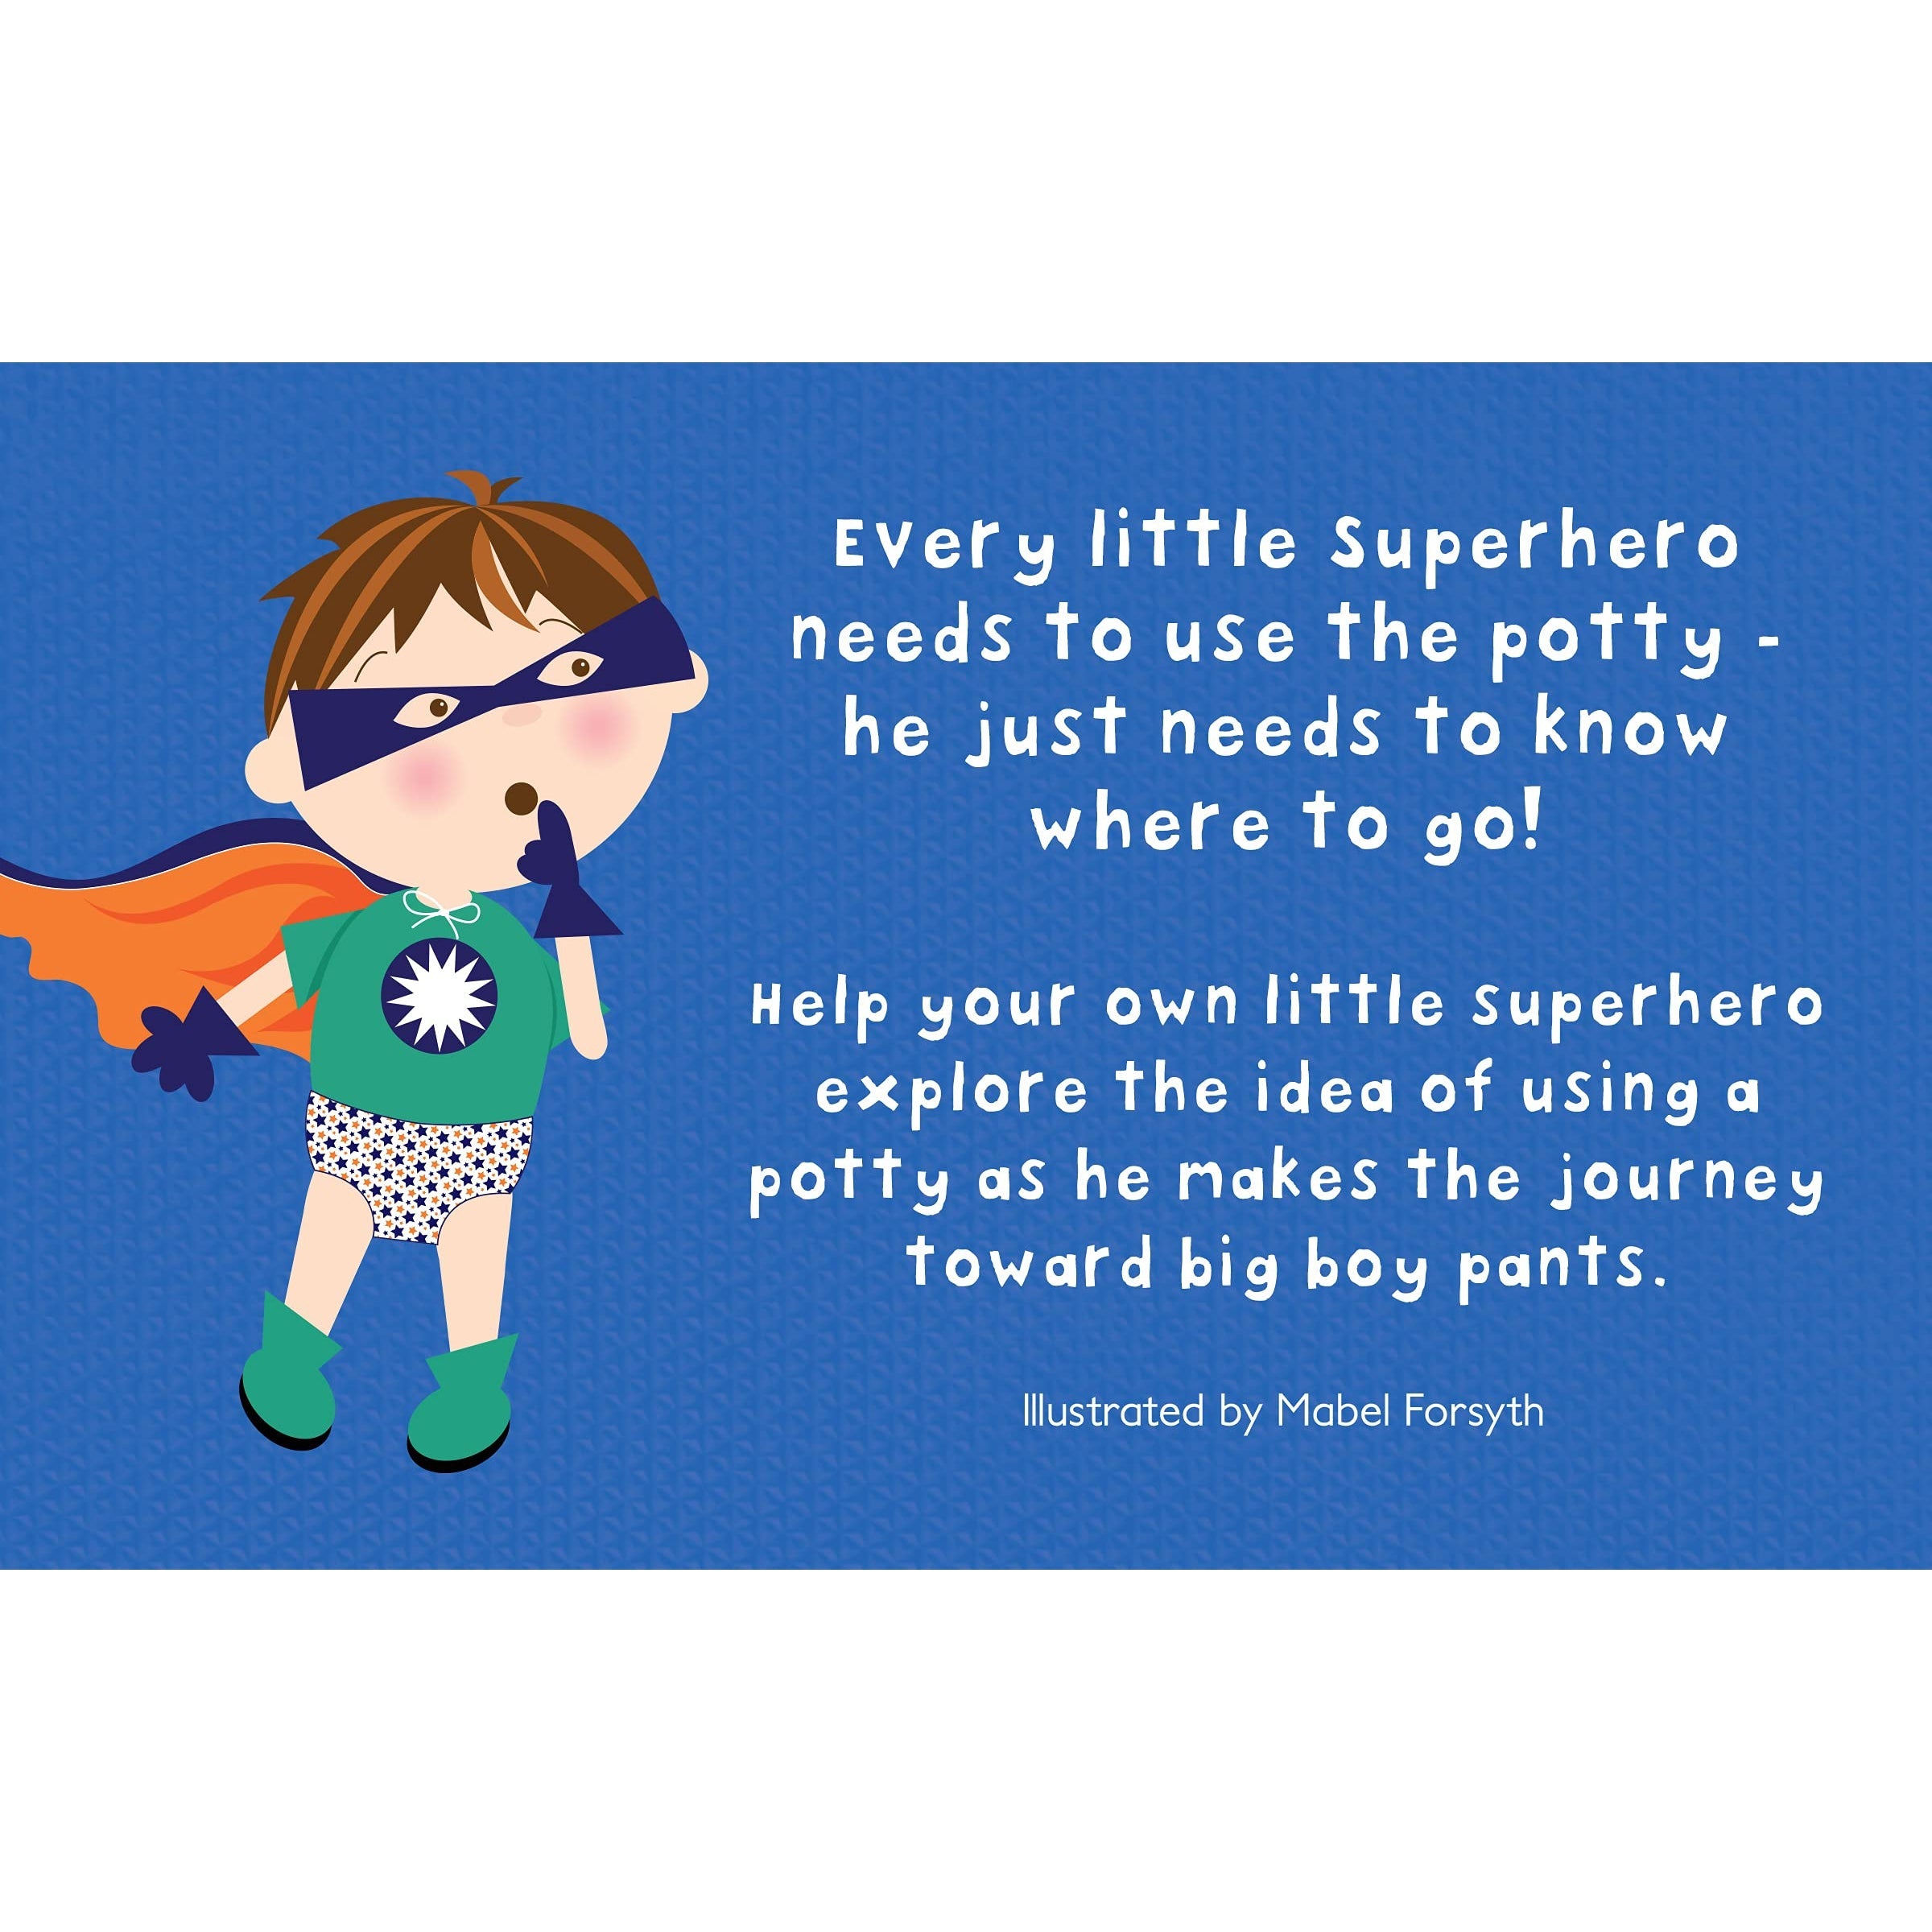 Parragon Books: Potty Superhero: Get Ready For Big Boy Pants! Children's Potty Training Board Book-COTTAGE DOOR PRESS-Little Giant Kidz